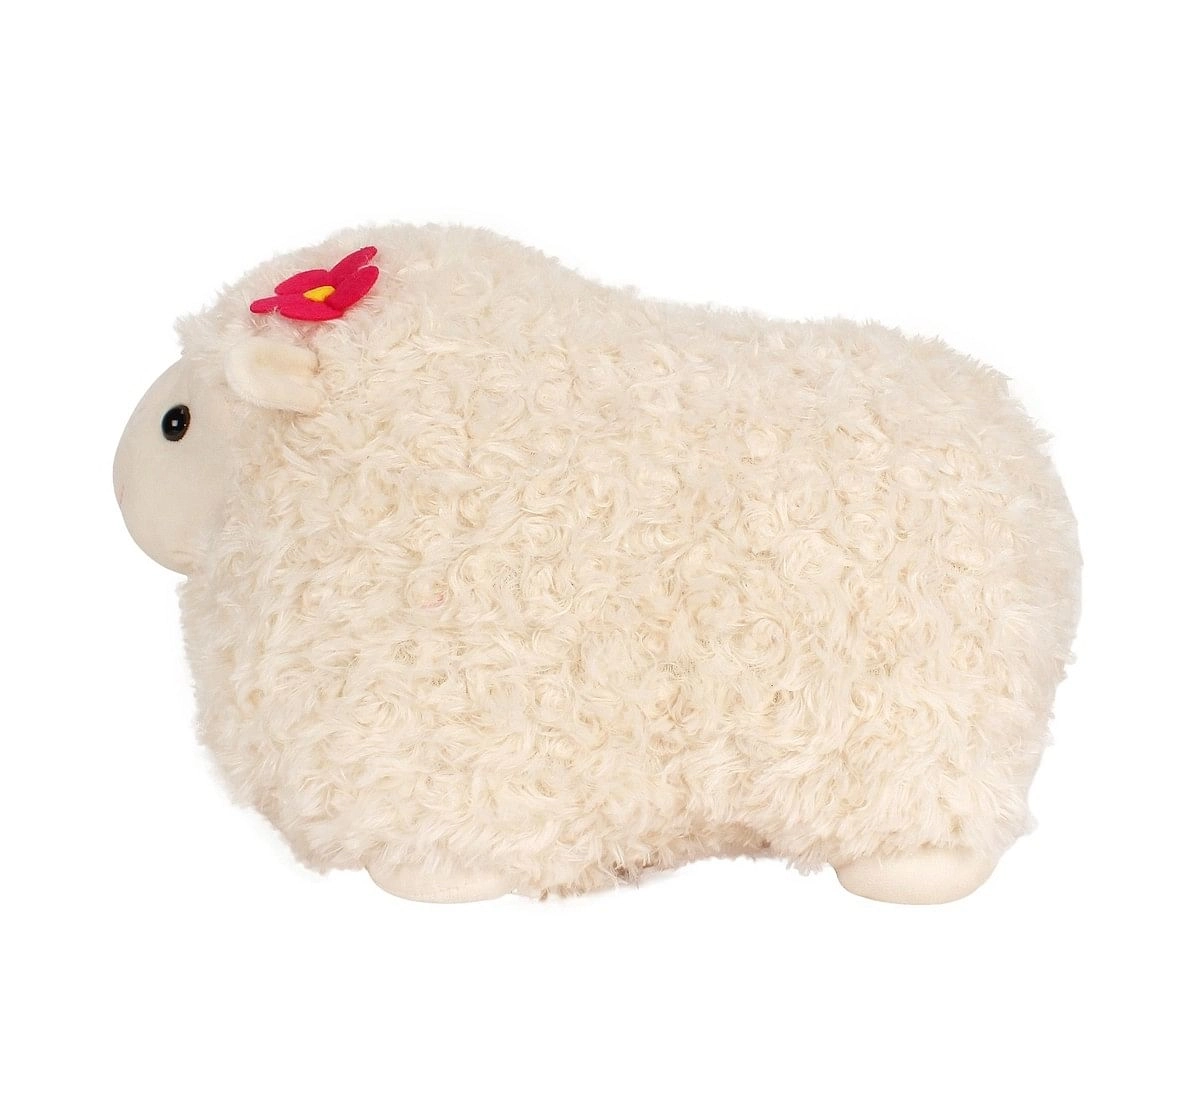 Fuzzbuzz Cream Lamb Stuffed Animal - 43Cm Quirky Soft Toys for Kids age 0M+ - 29 Cm (Cream)